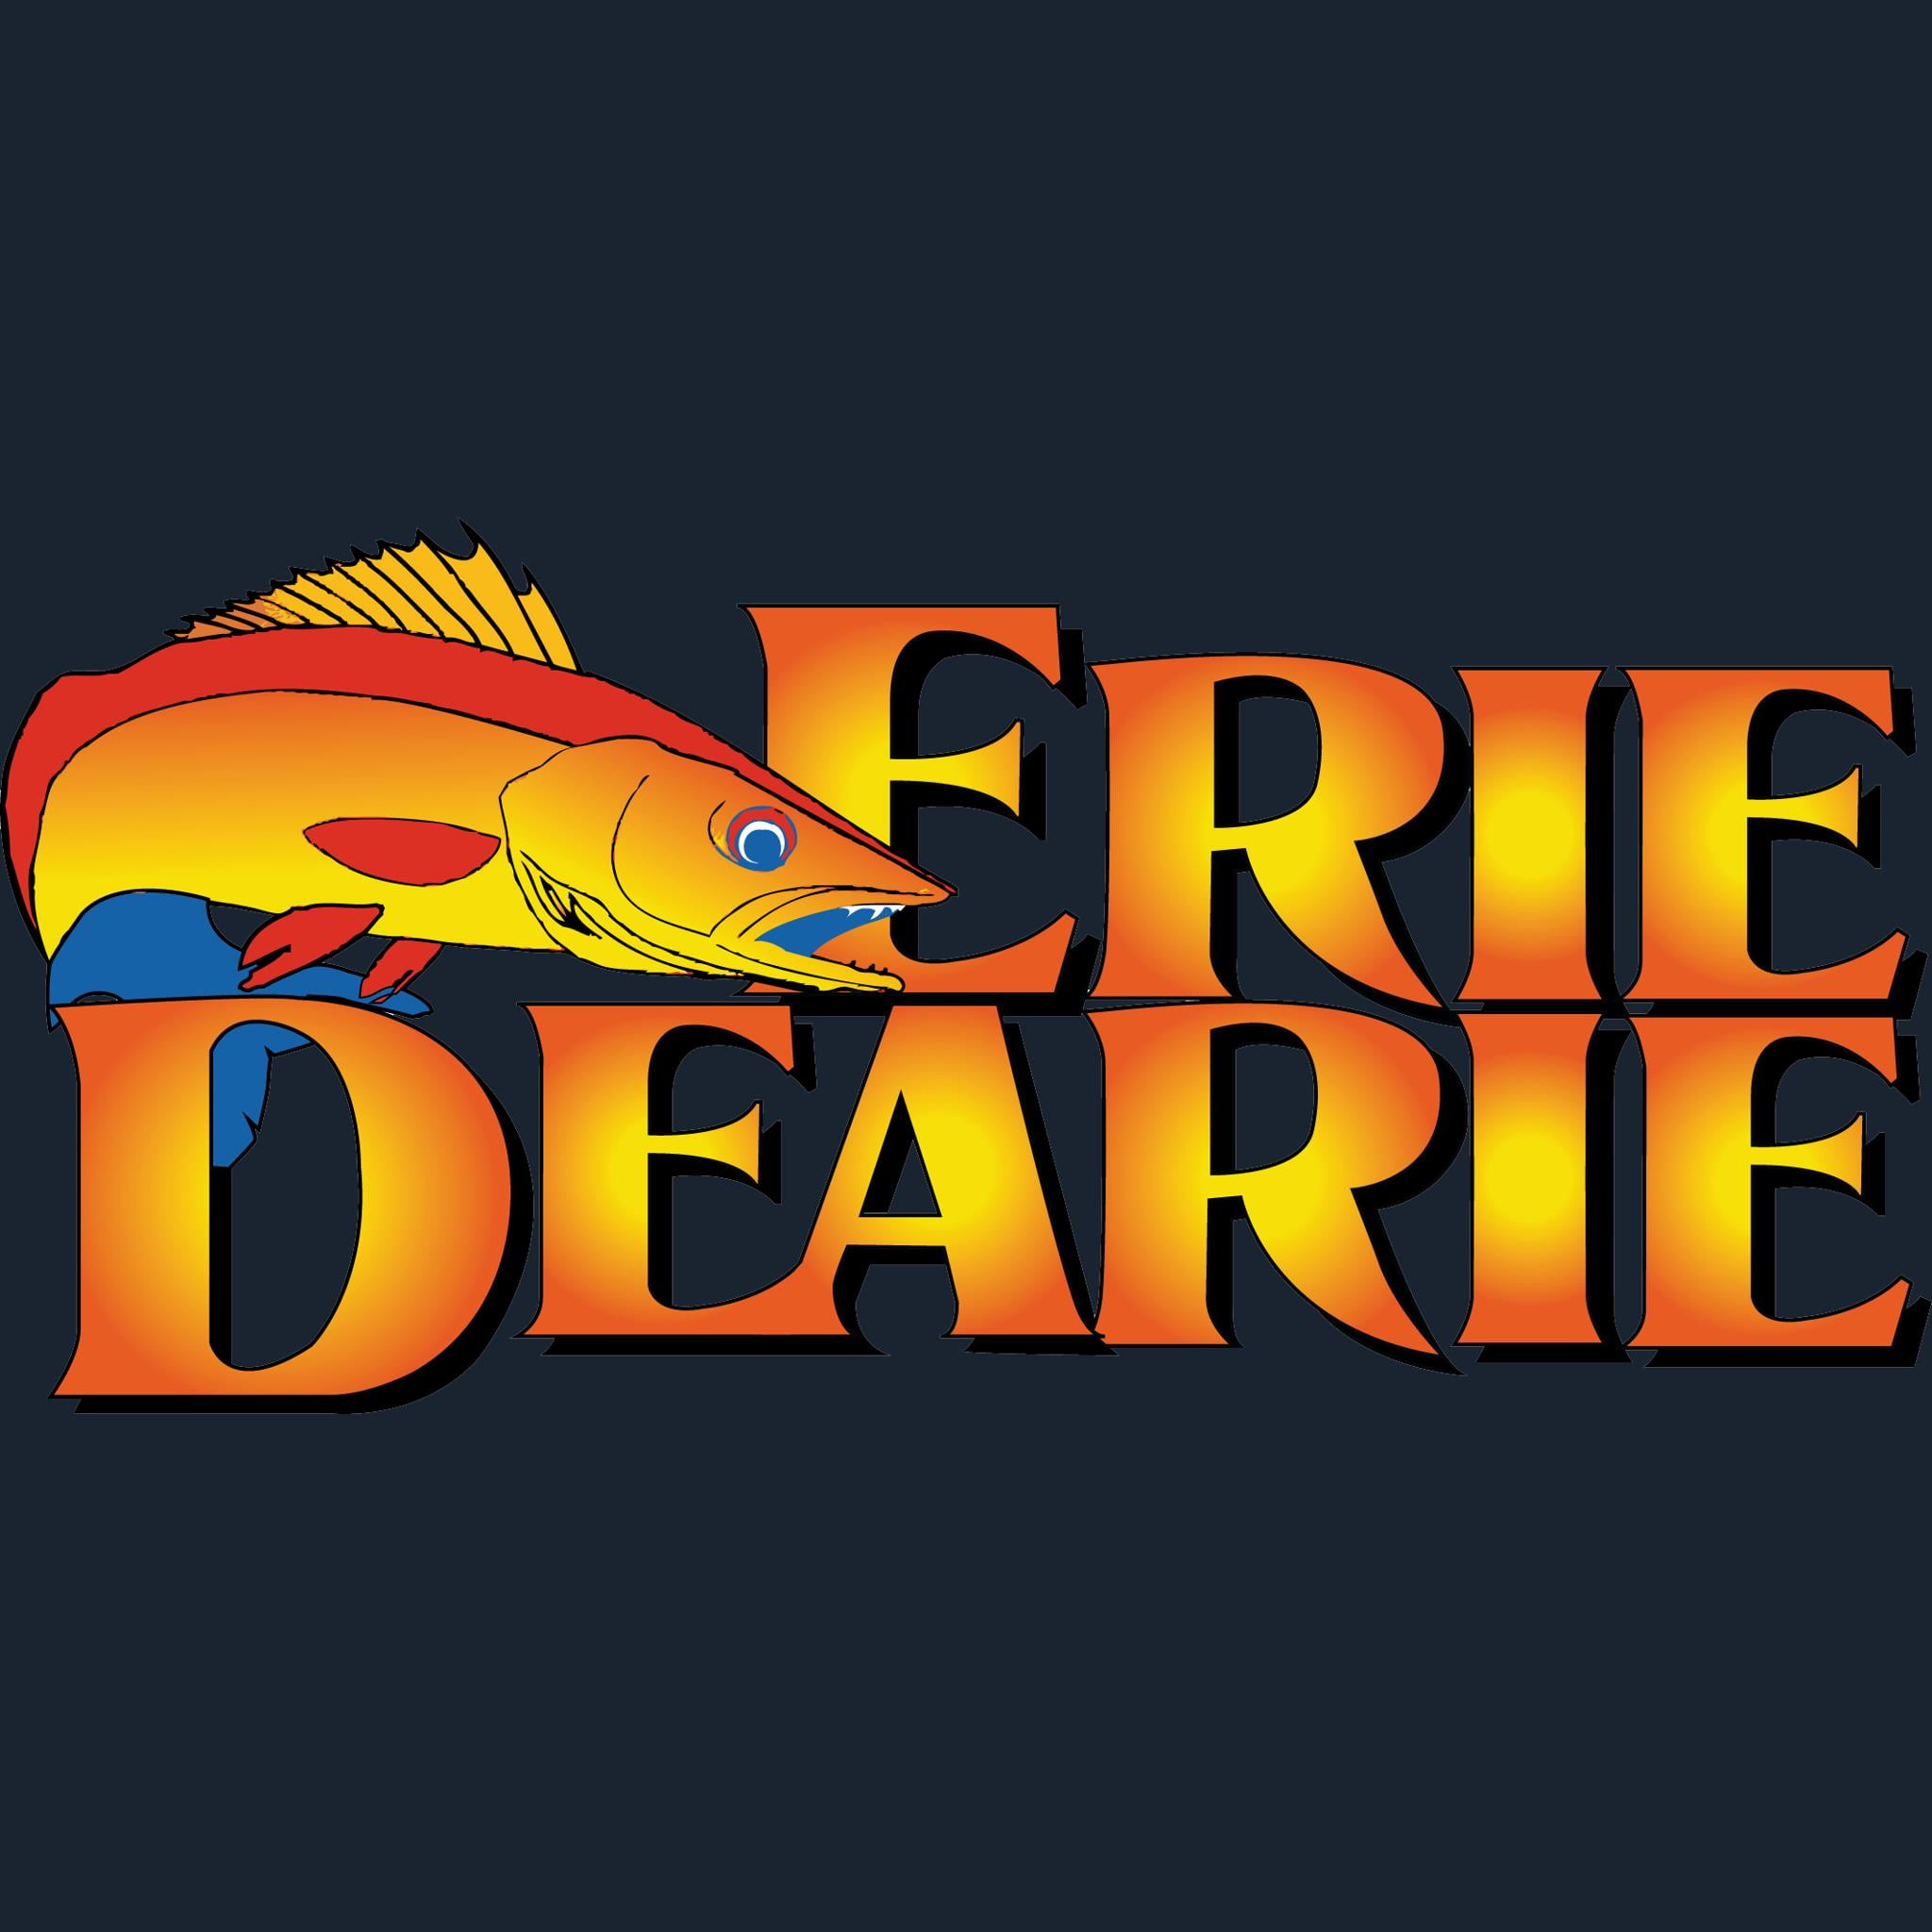 Erie Dearie Original Spinner